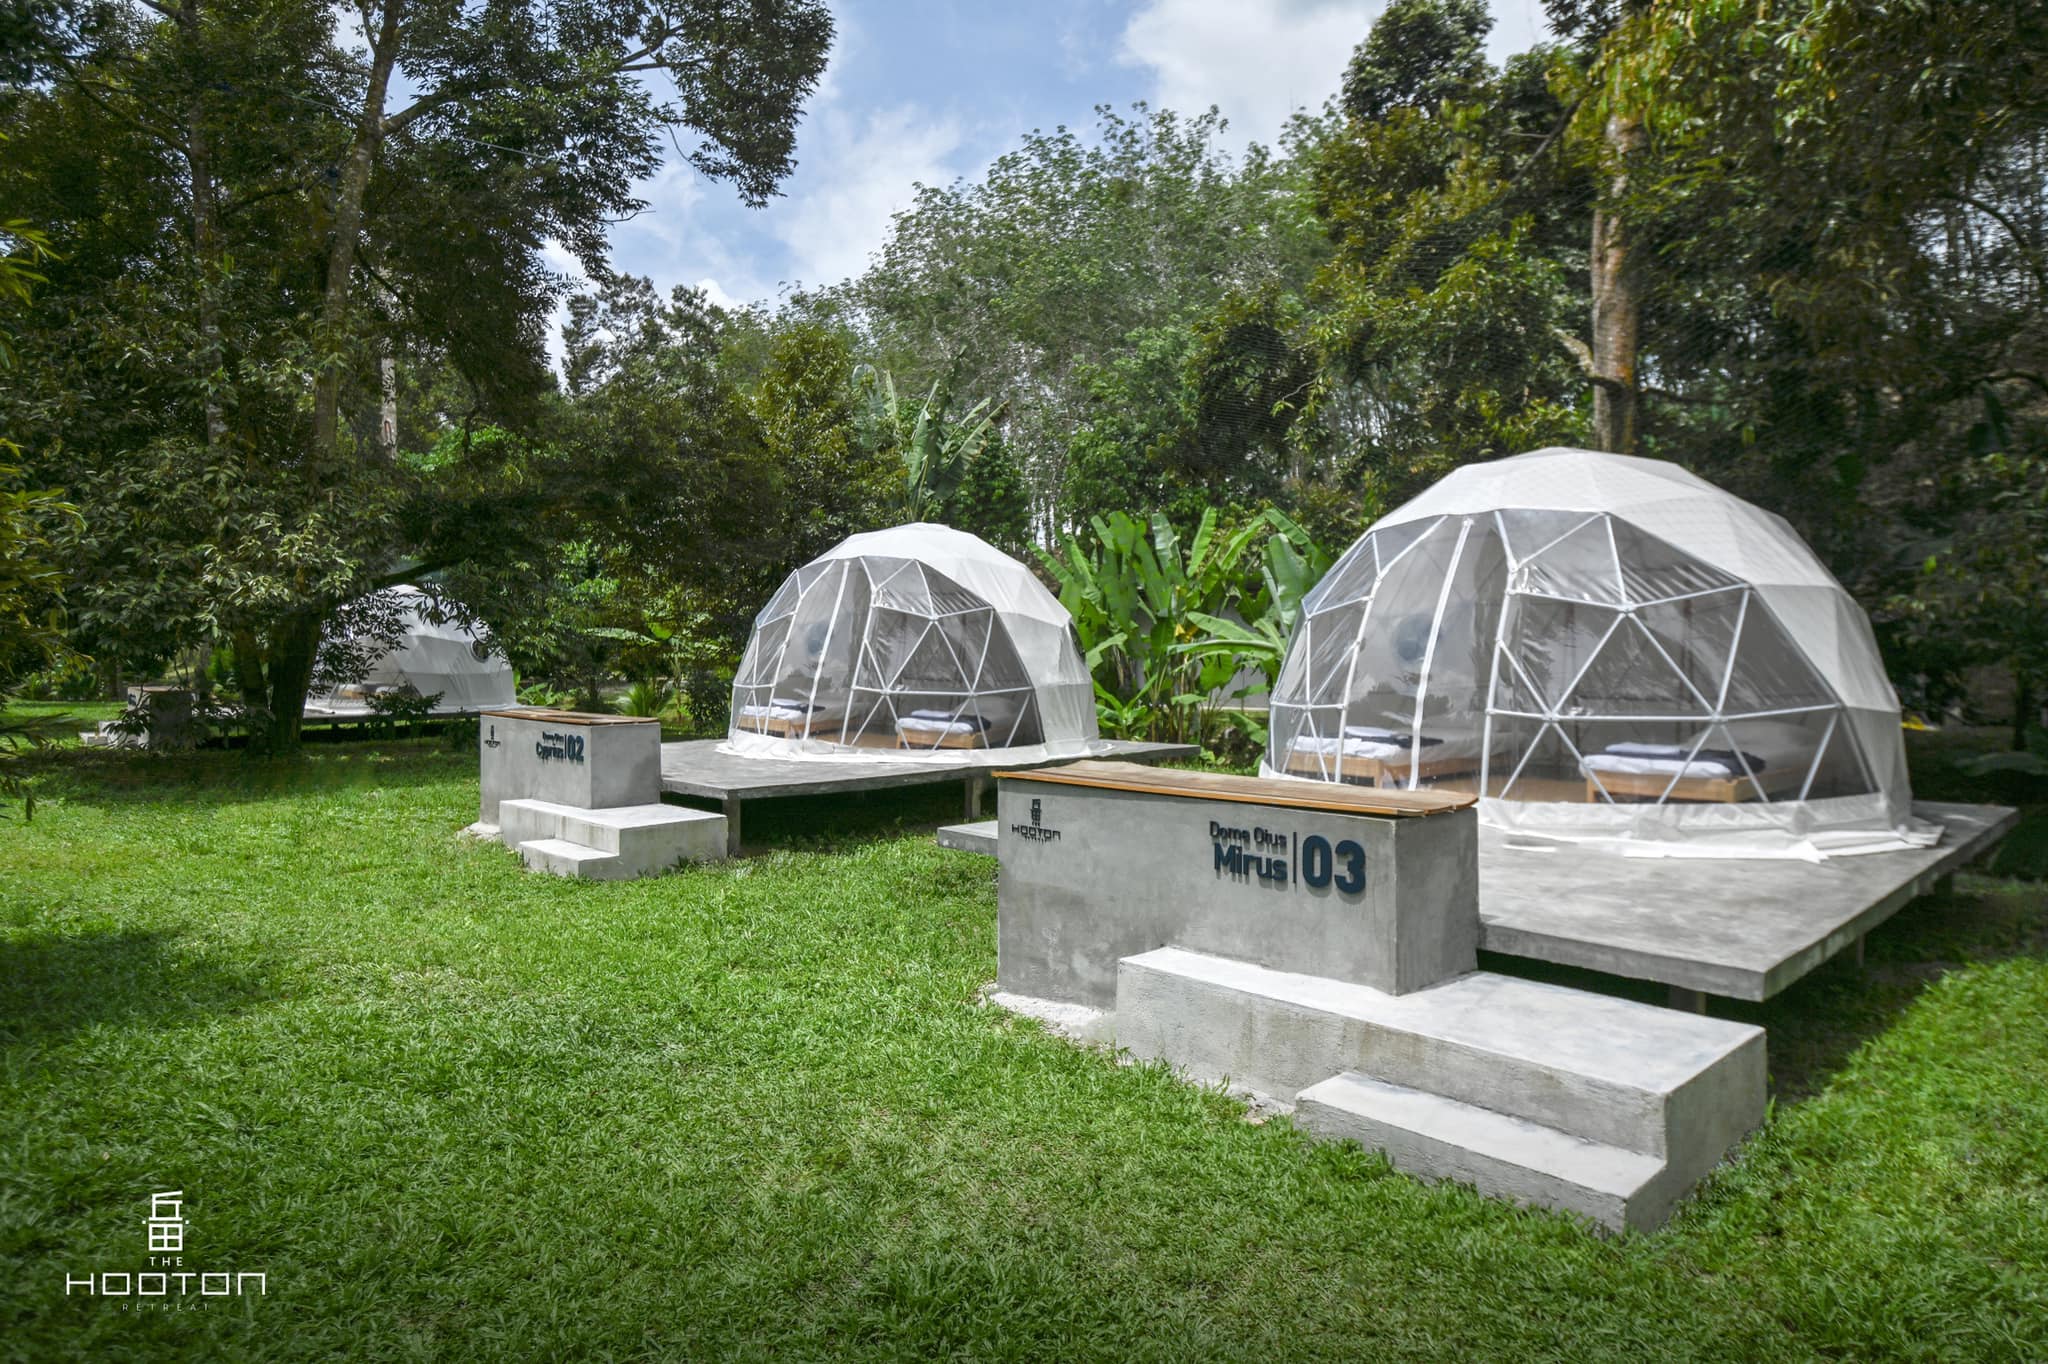 The Hooton Retreat - domes